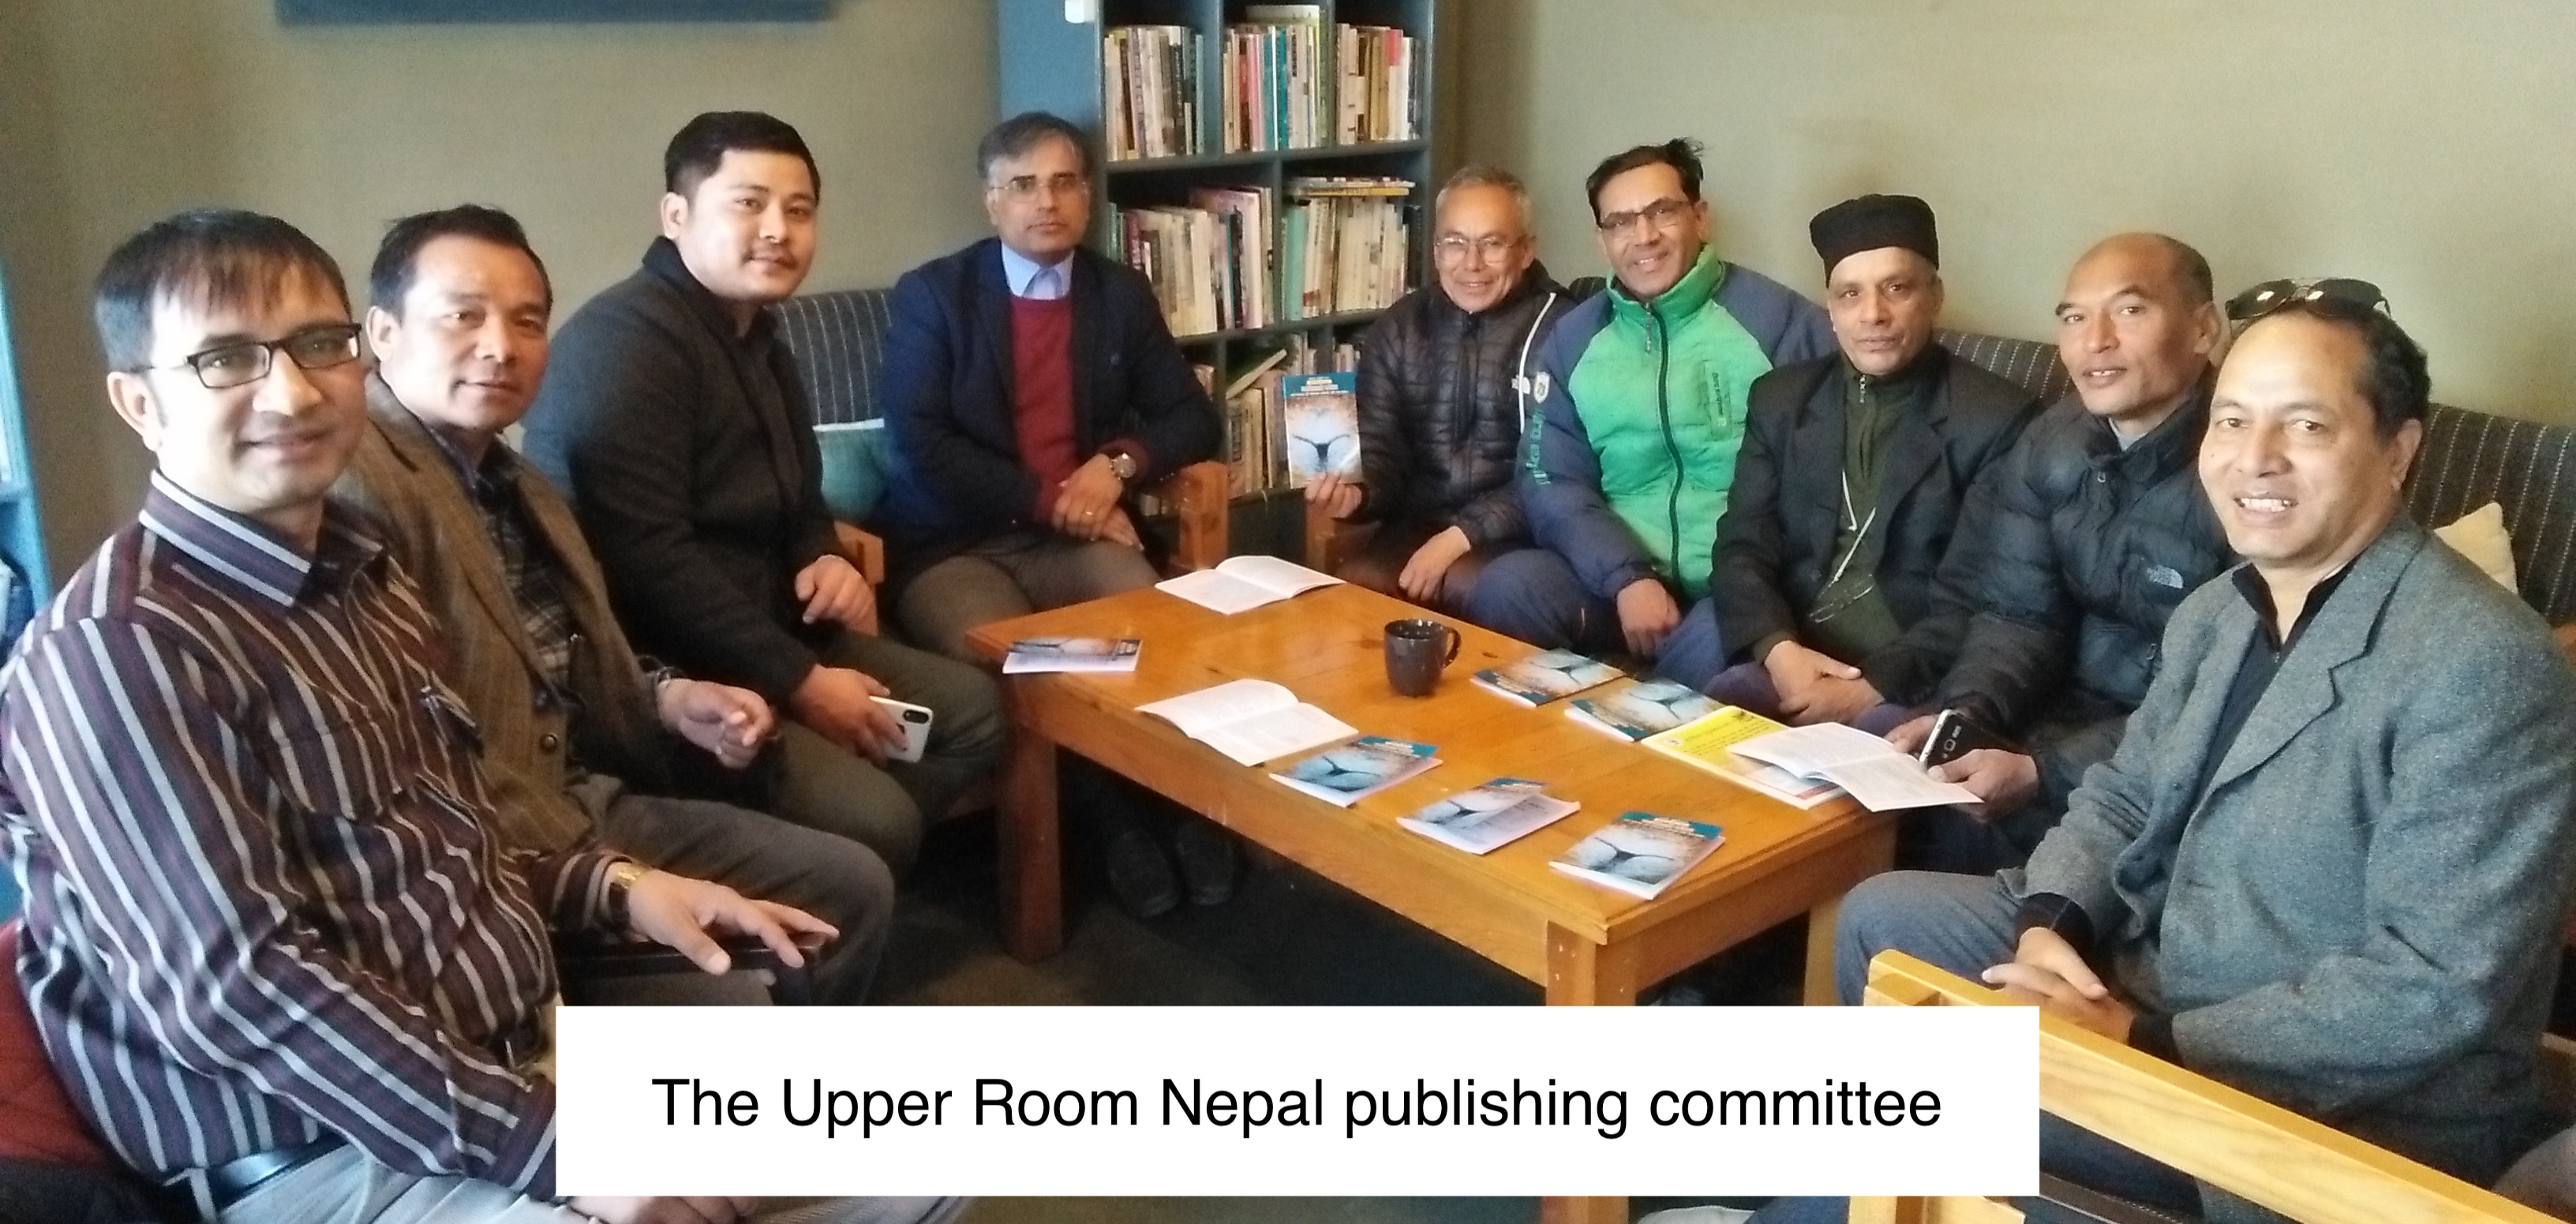 UR Nepal publishing committee w- caption.jpg